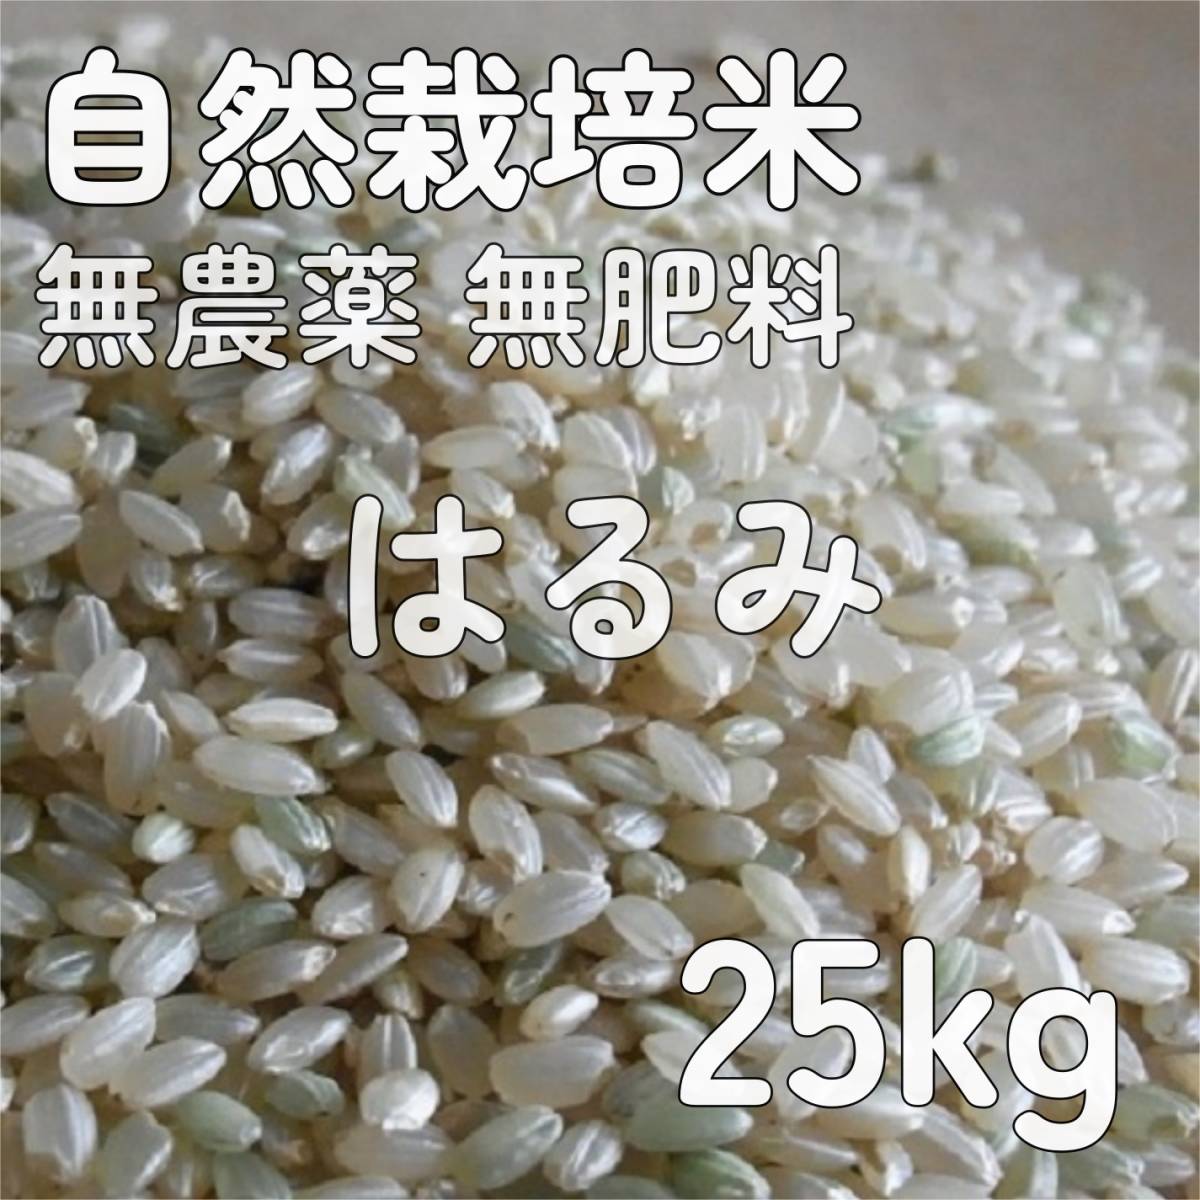 人気商品は 農薬不使用 化学肥料不使用 無農薬 自然栽培米 ヒノヒカリ 大粒 玄米